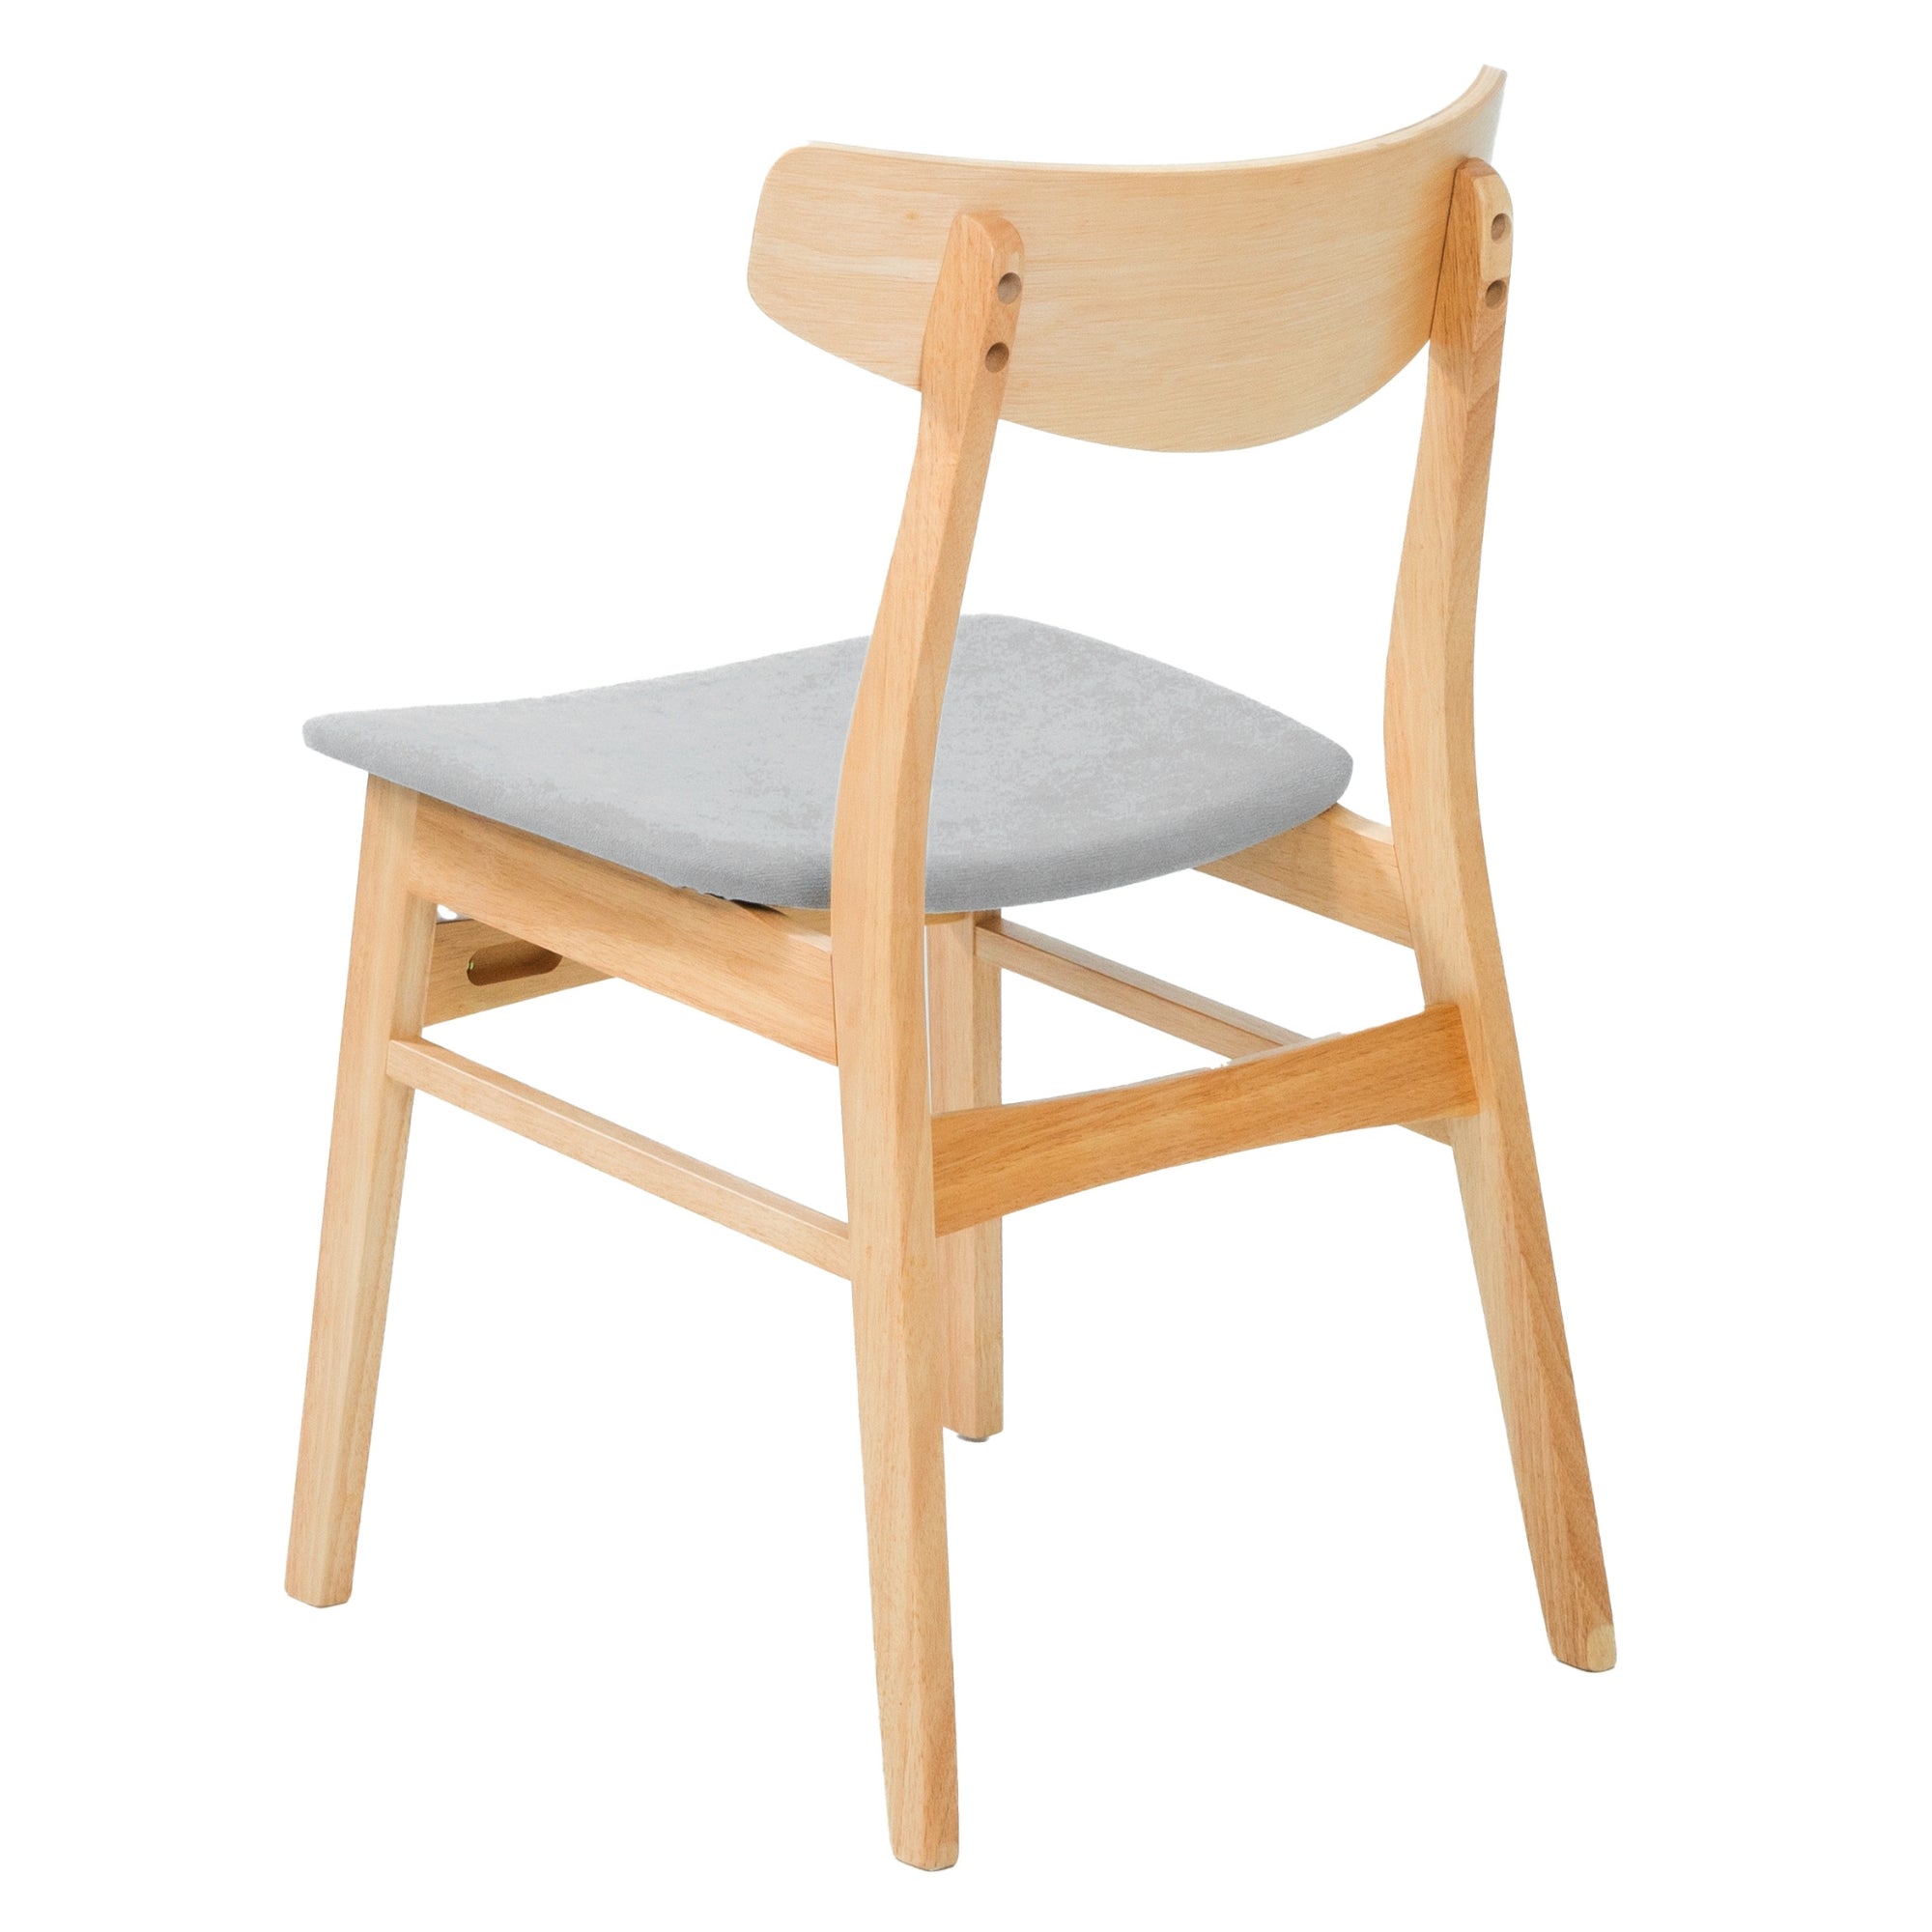 8pc Natural Rubberwood Dining Chairs, Fabric Seat, Scandinavian